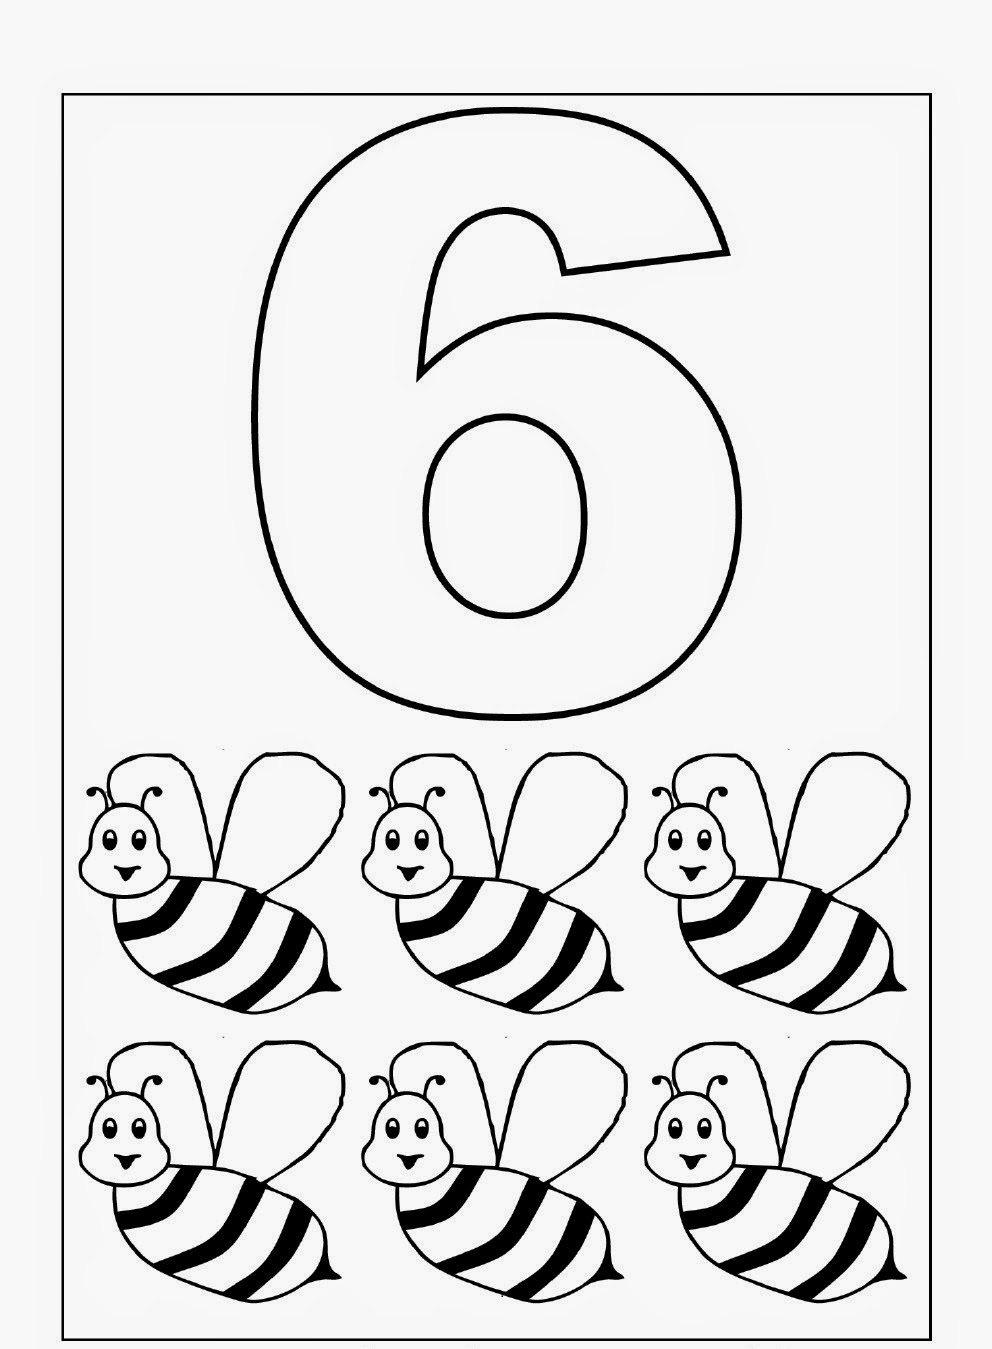 6 - Kindergarten Coloring Pages